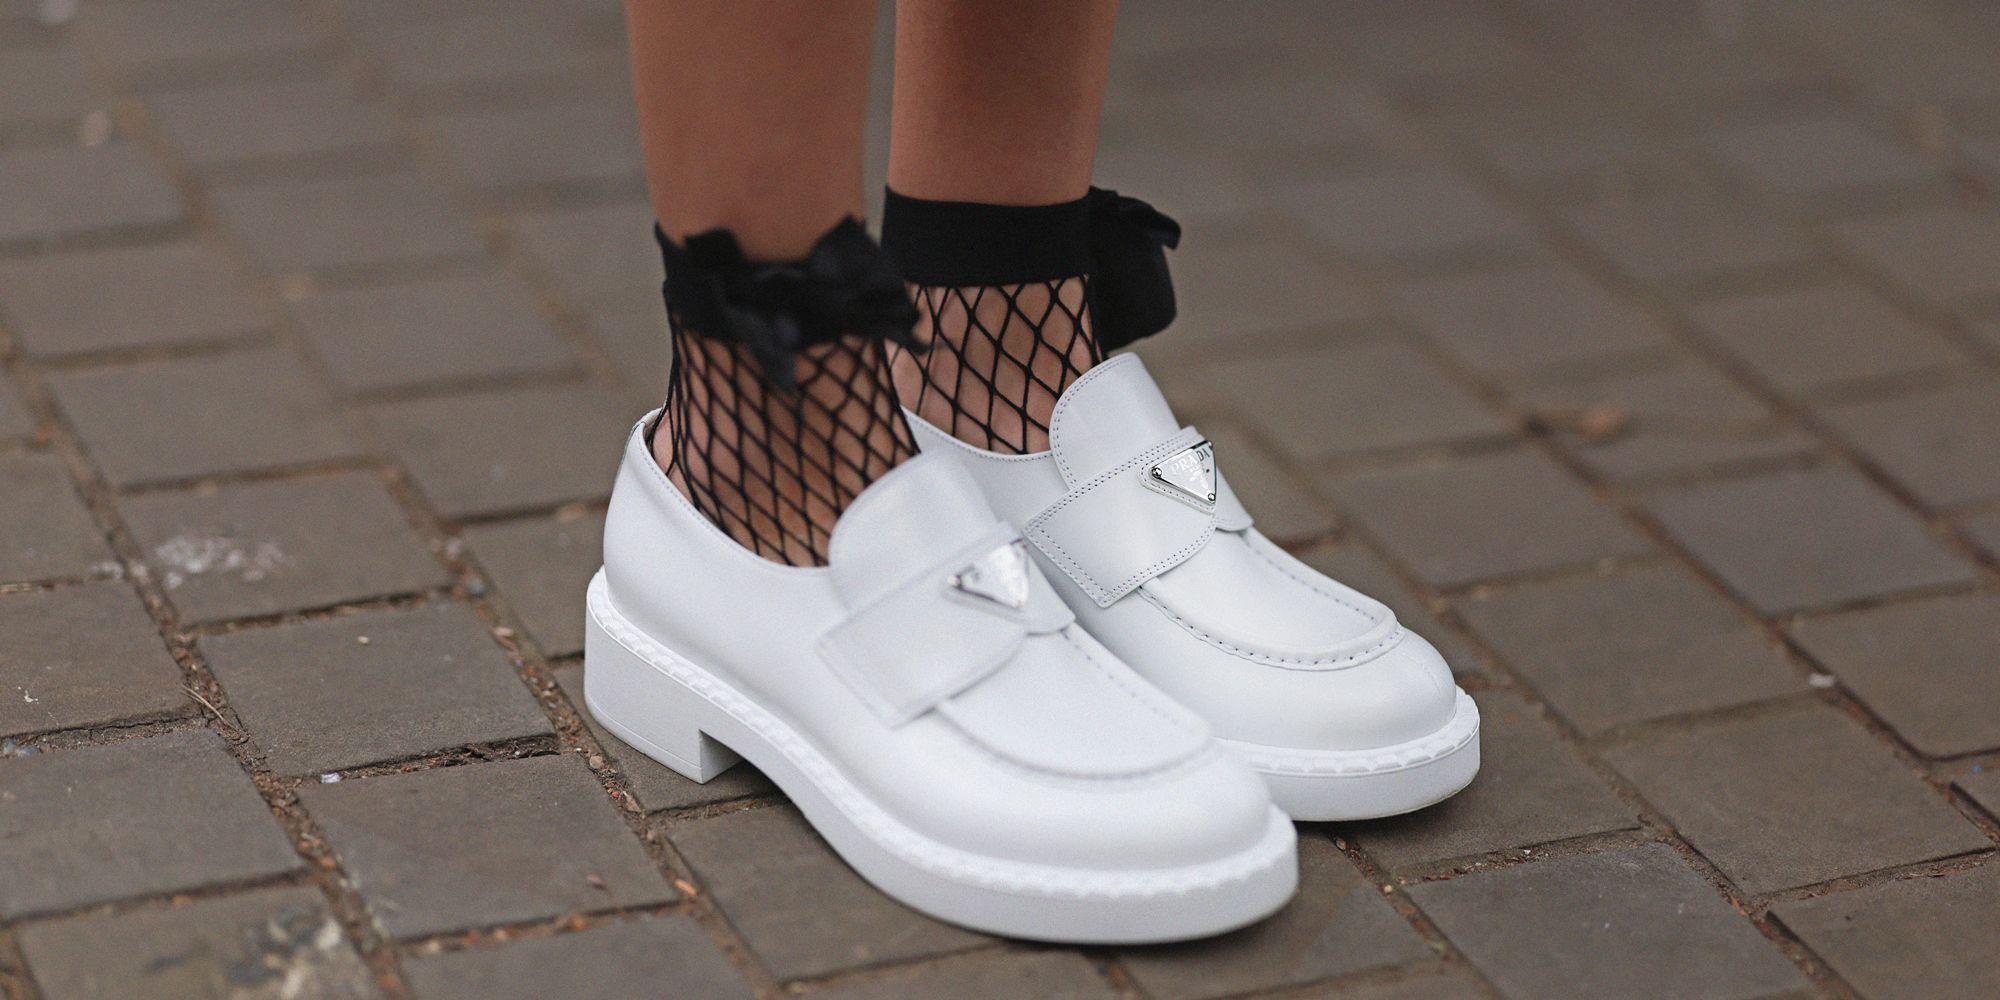  Women's Platform Penny Loafers Comfort Chunky Heel Slip On  Business Work Dress Shoes Beige